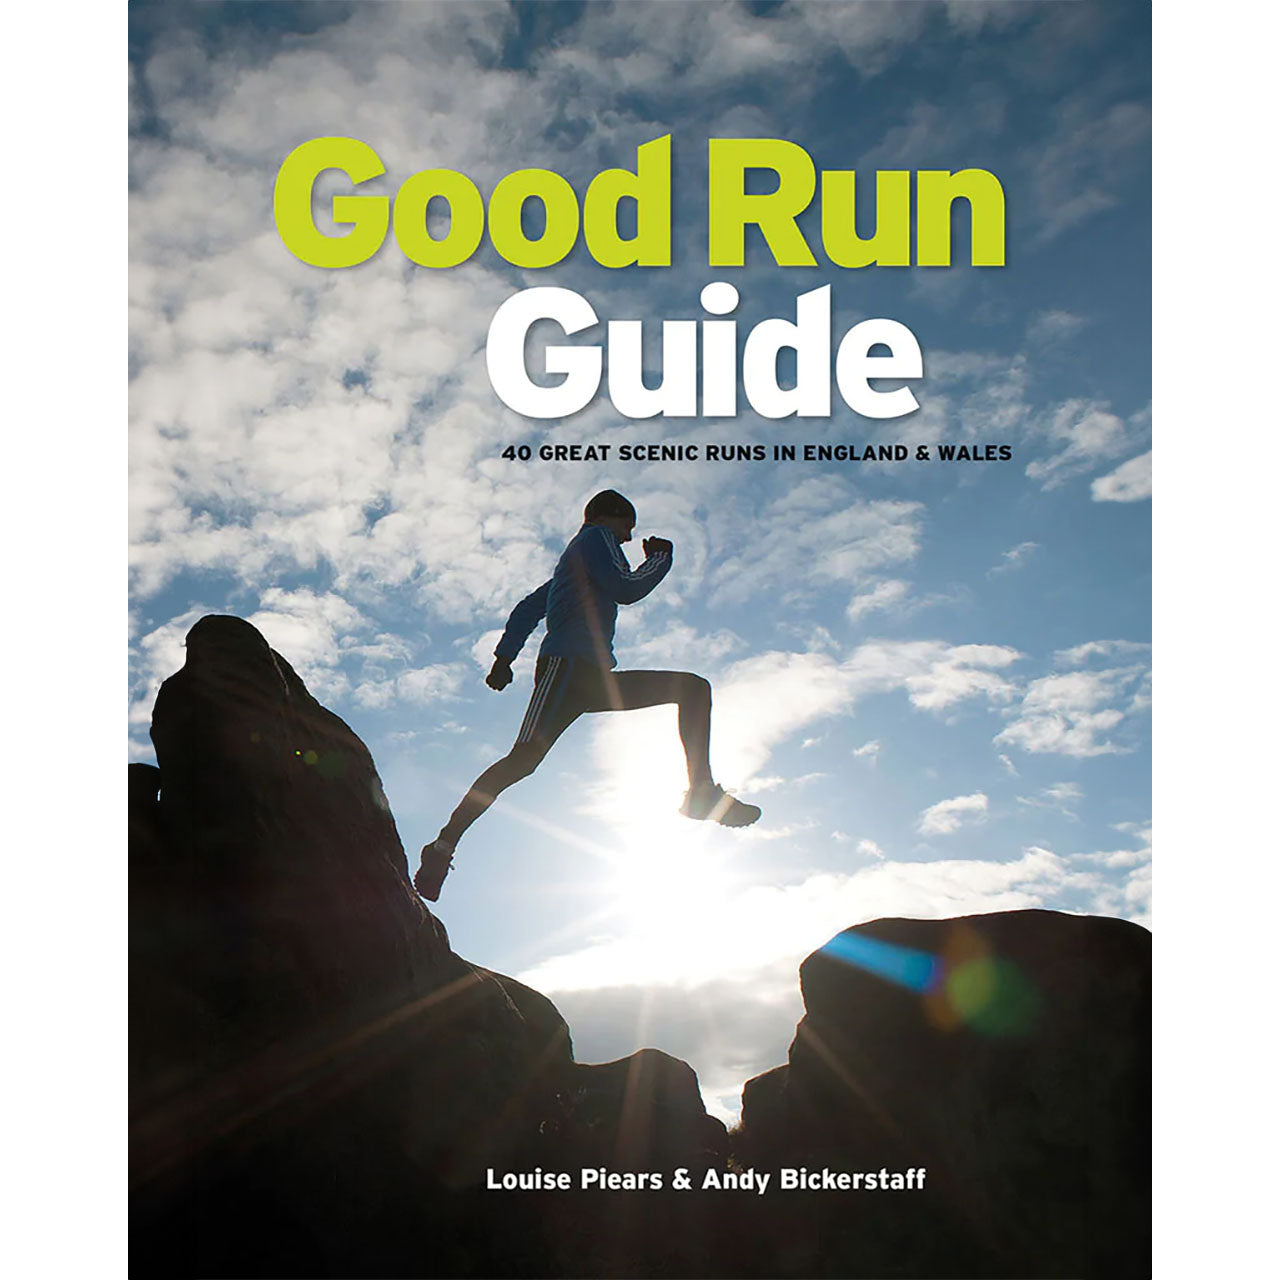 Good Run Guide by Louise Piears & Andy Bickerstaff